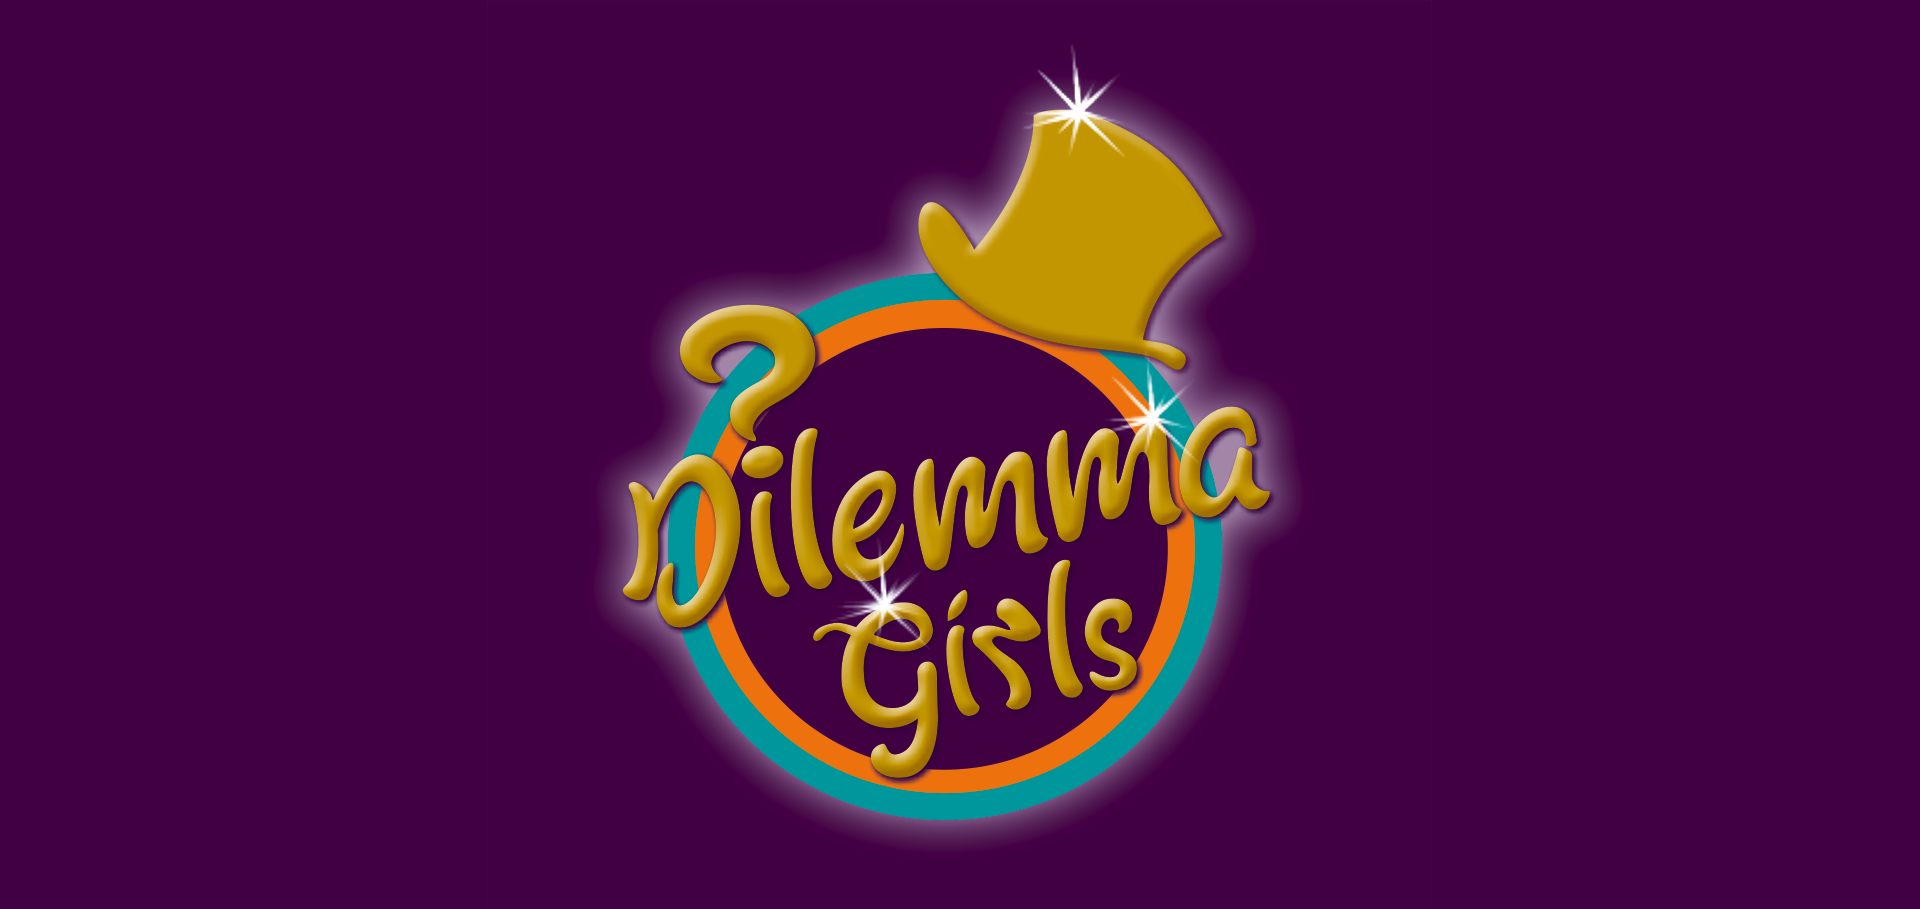 Dilemma Girls logo